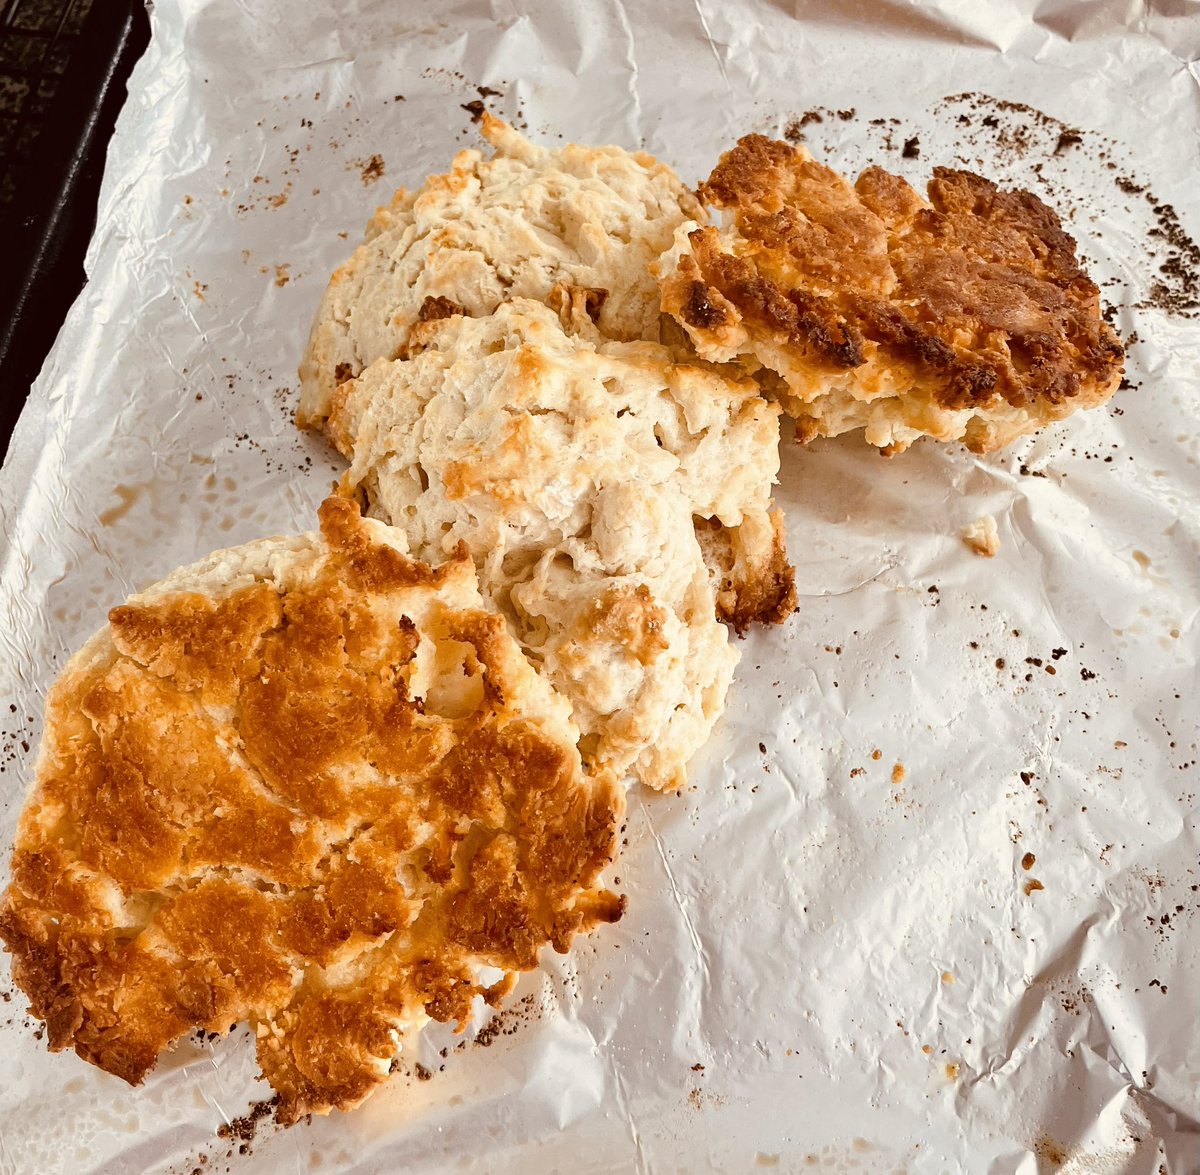 Crispy sour dough biscuits best I’ve ever made!